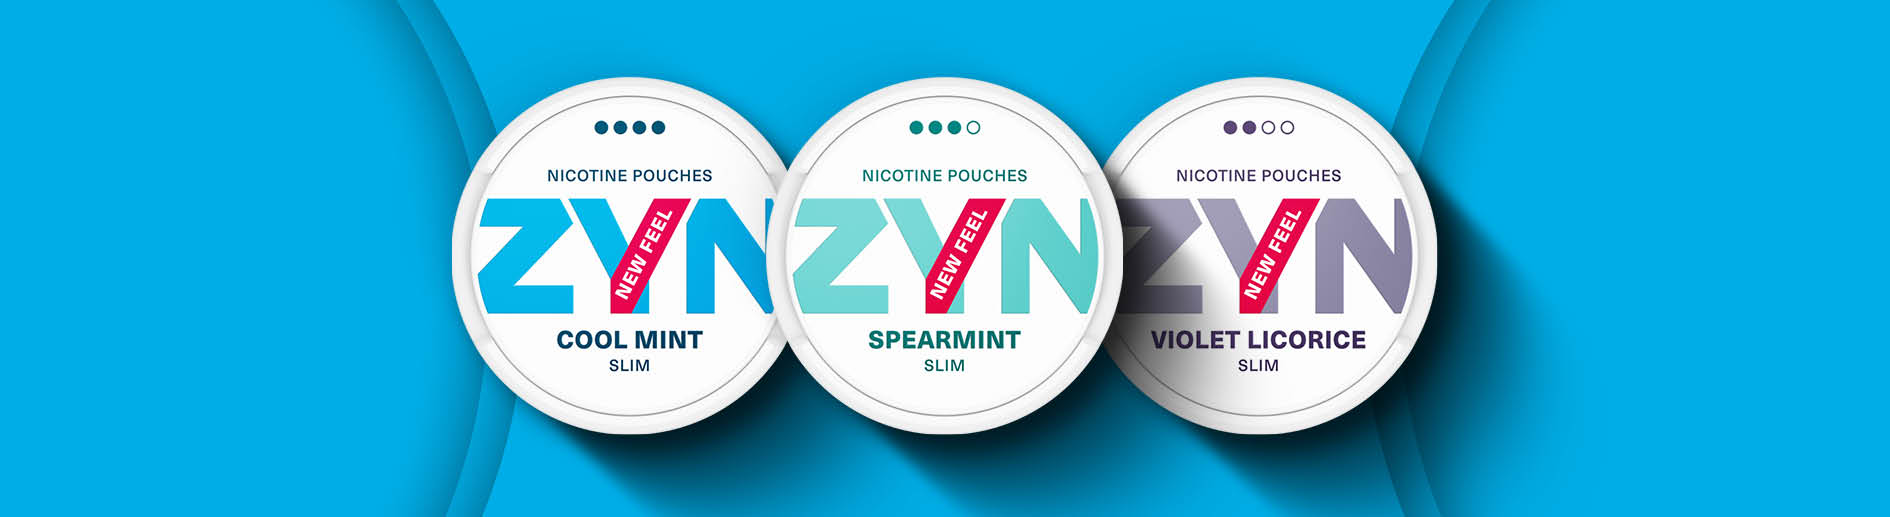 Ny markering på ZYN-dosorna